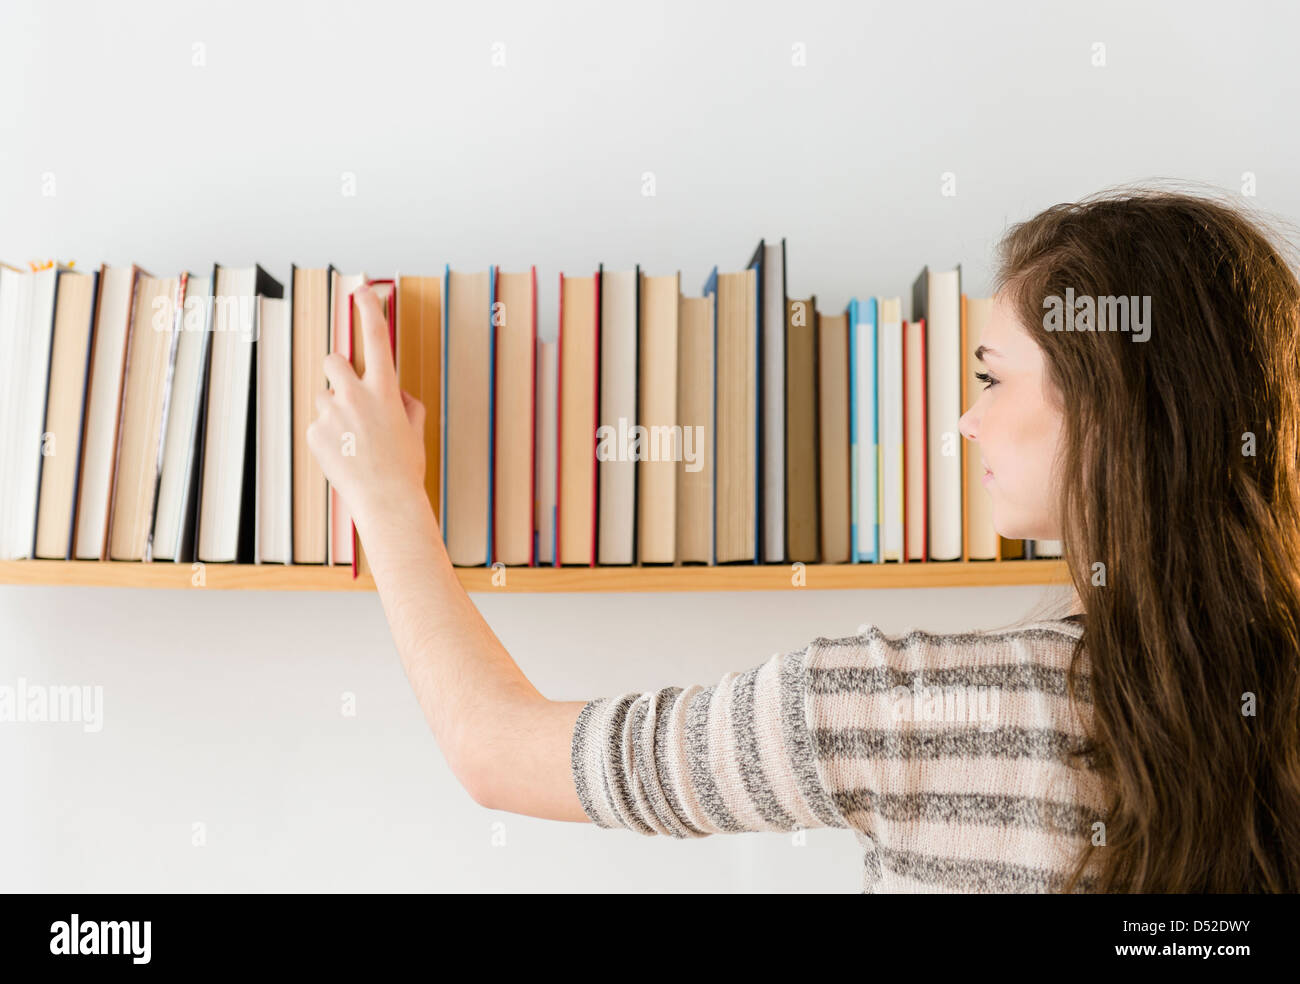 Hispanic girl selecting book from shelf Stock Photo